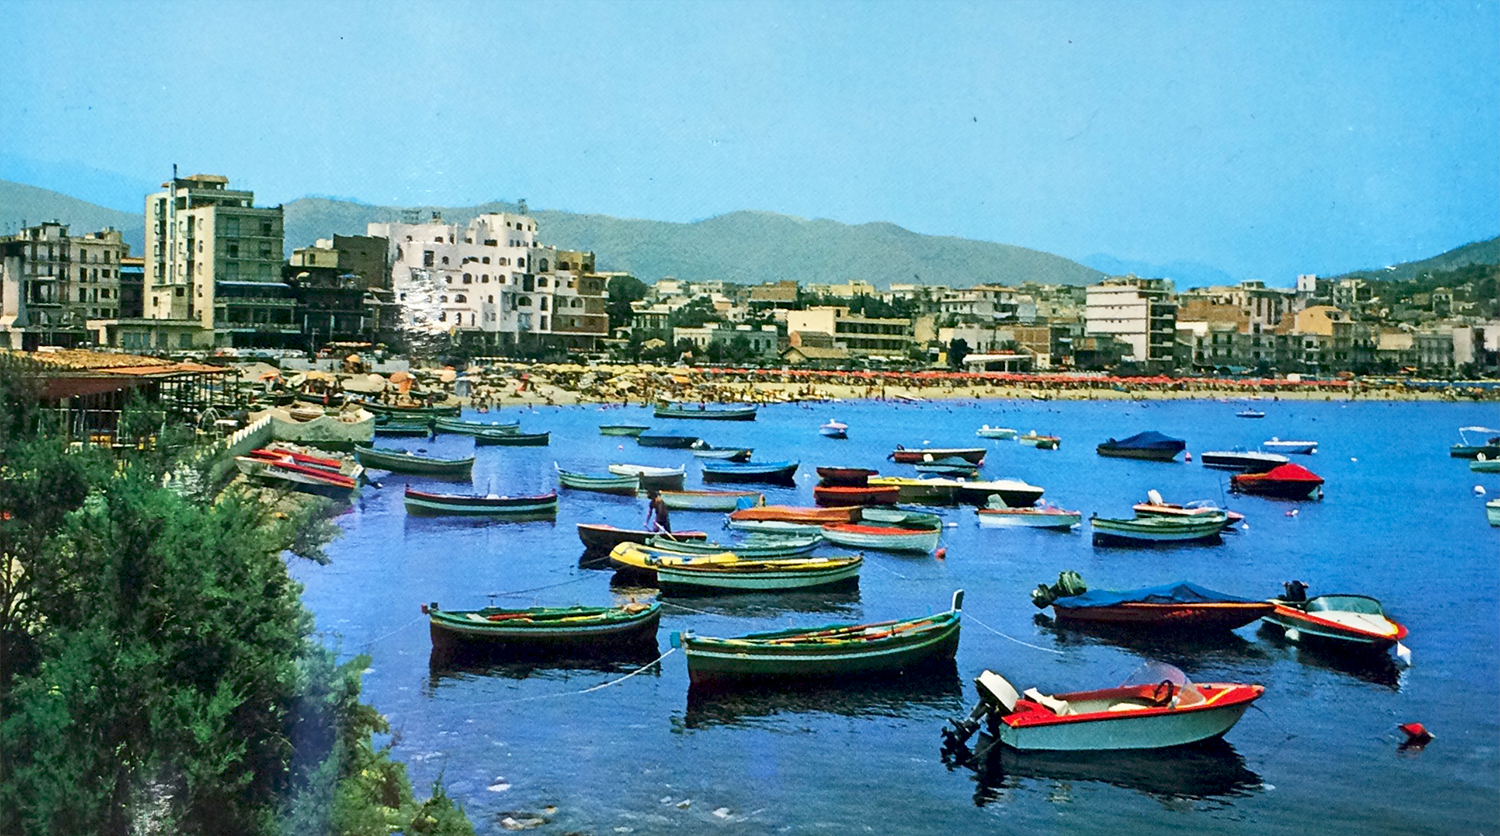 Postcards to Wanda: Sicily